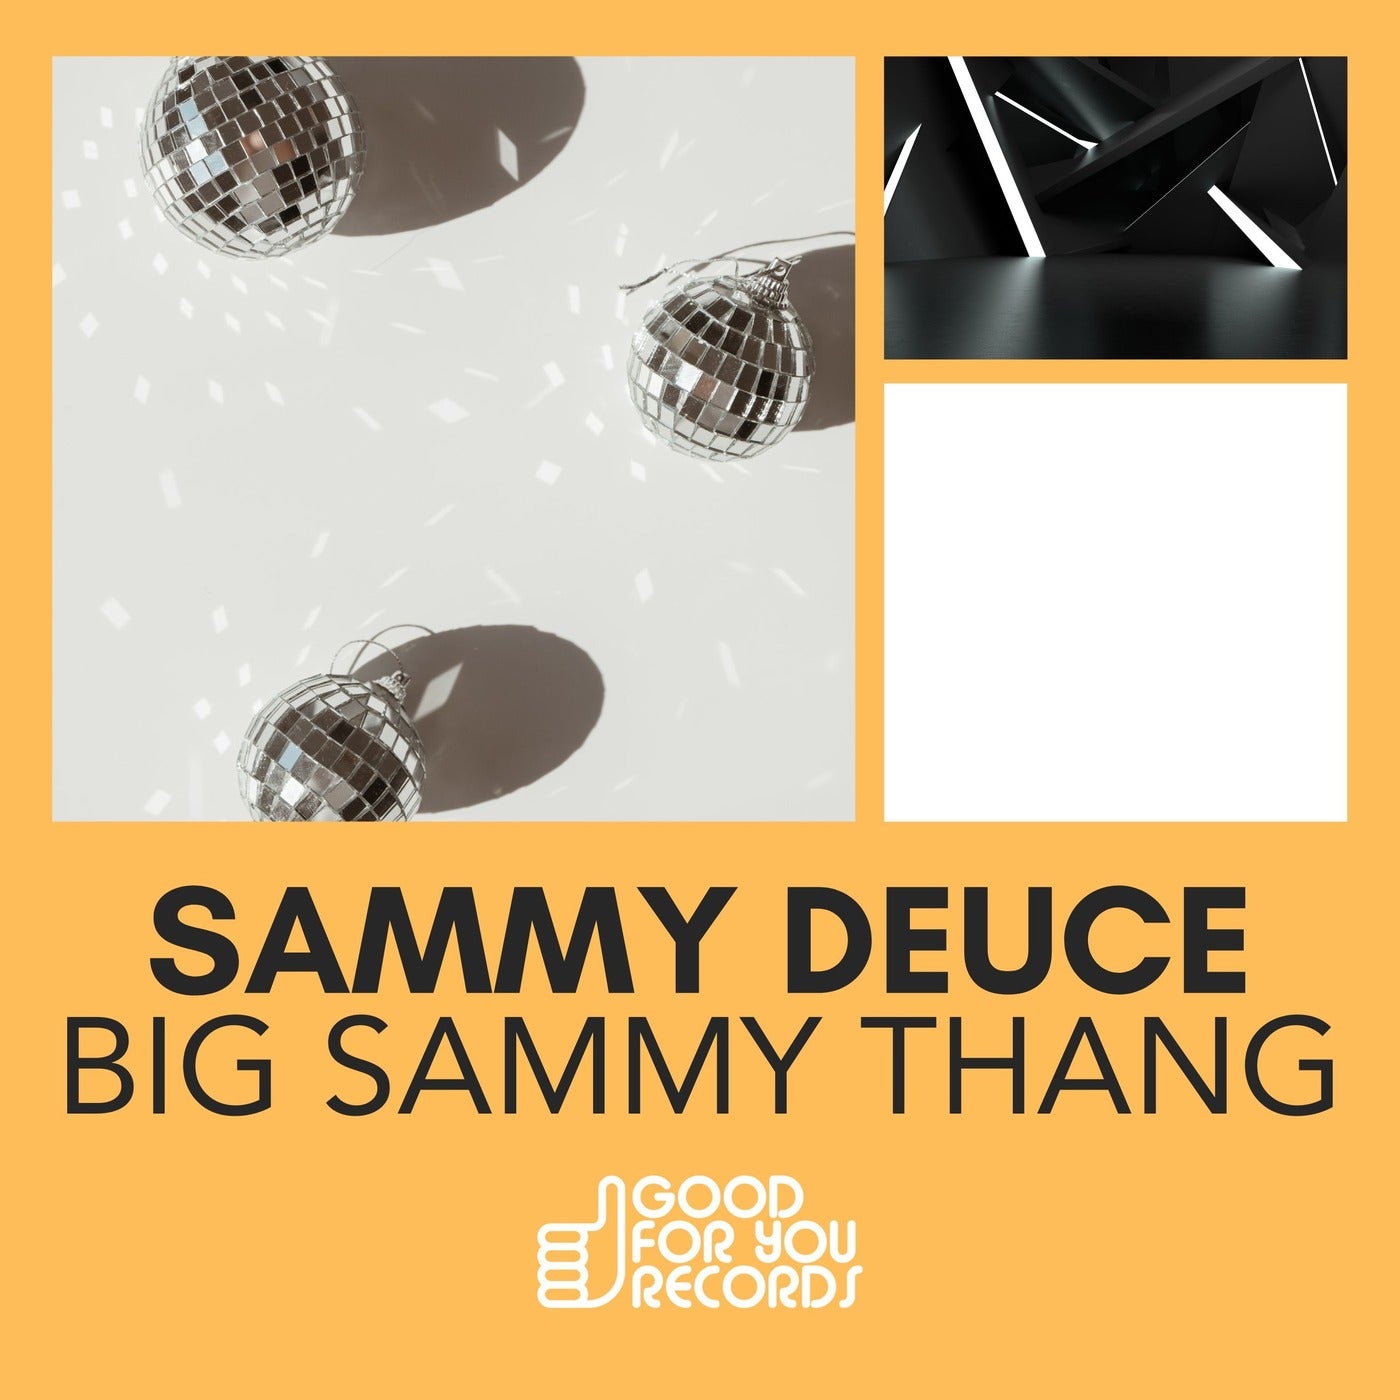 Big Sammy Thang